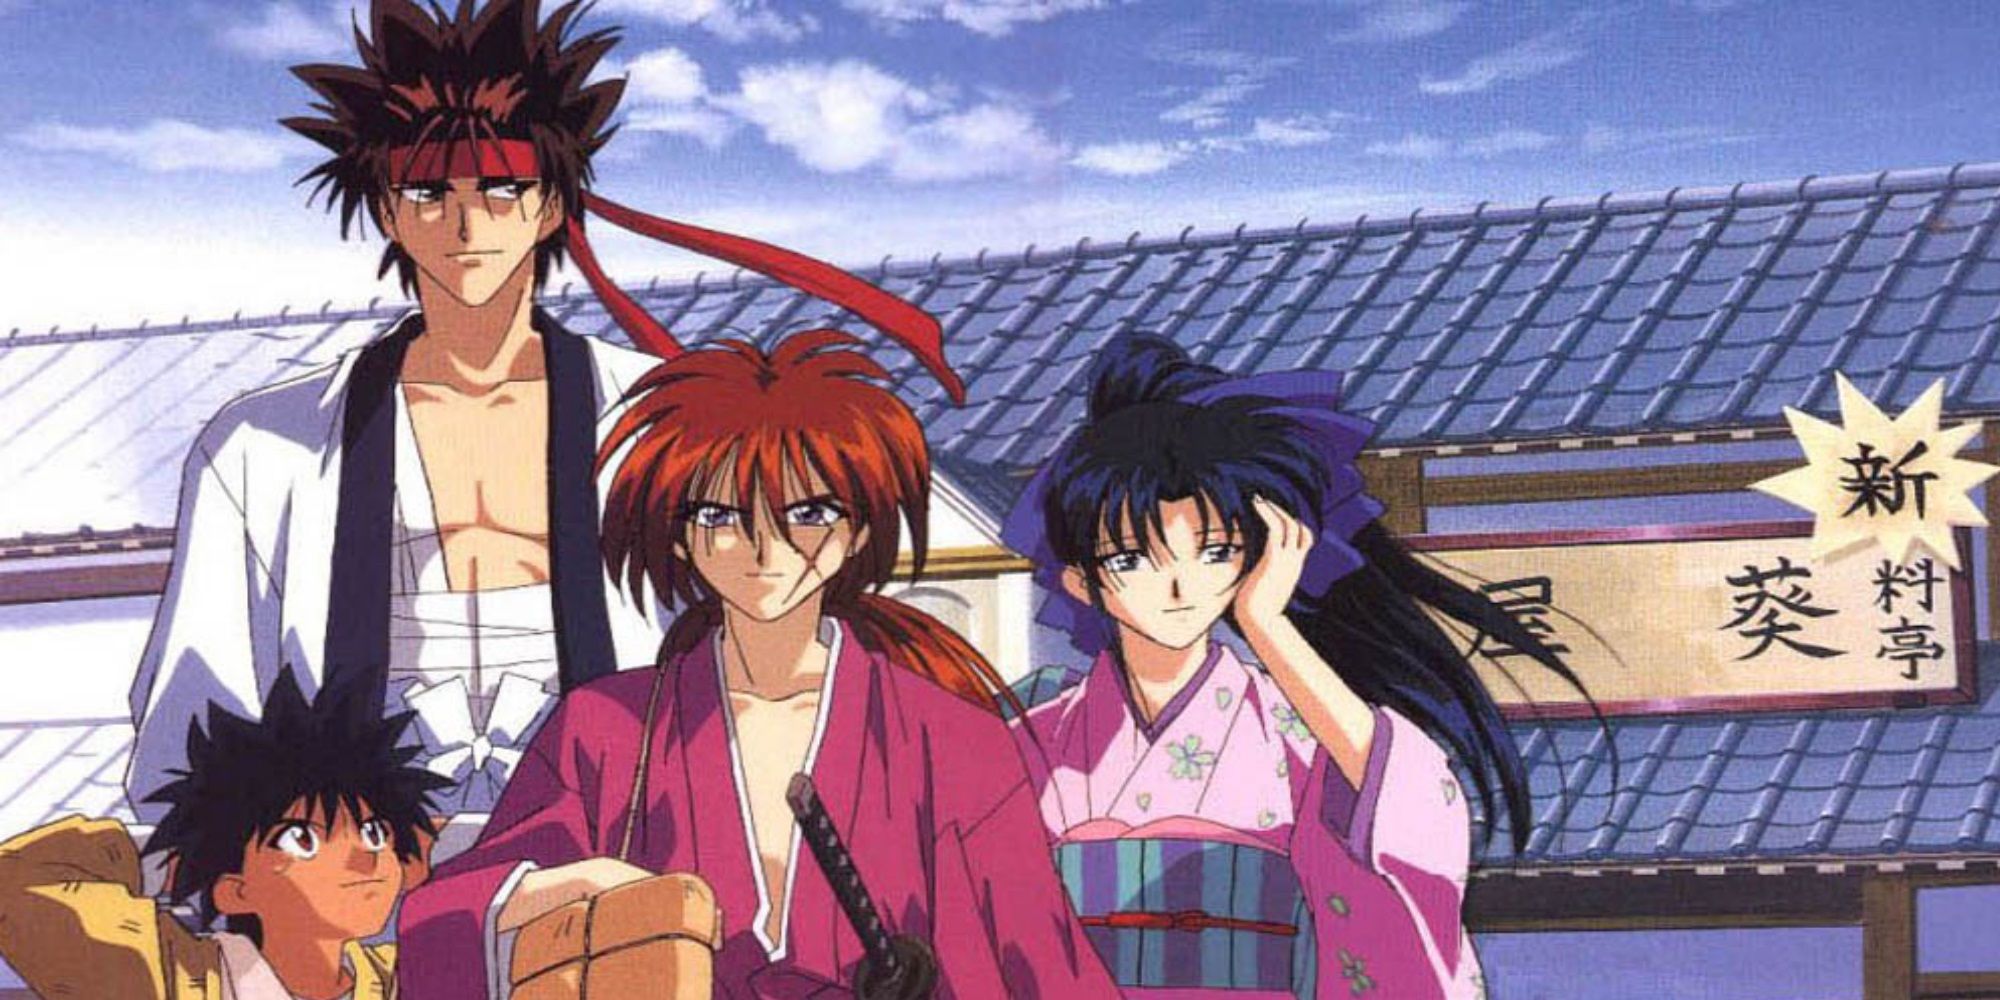 Rurouni Kenshin - The main cast together.